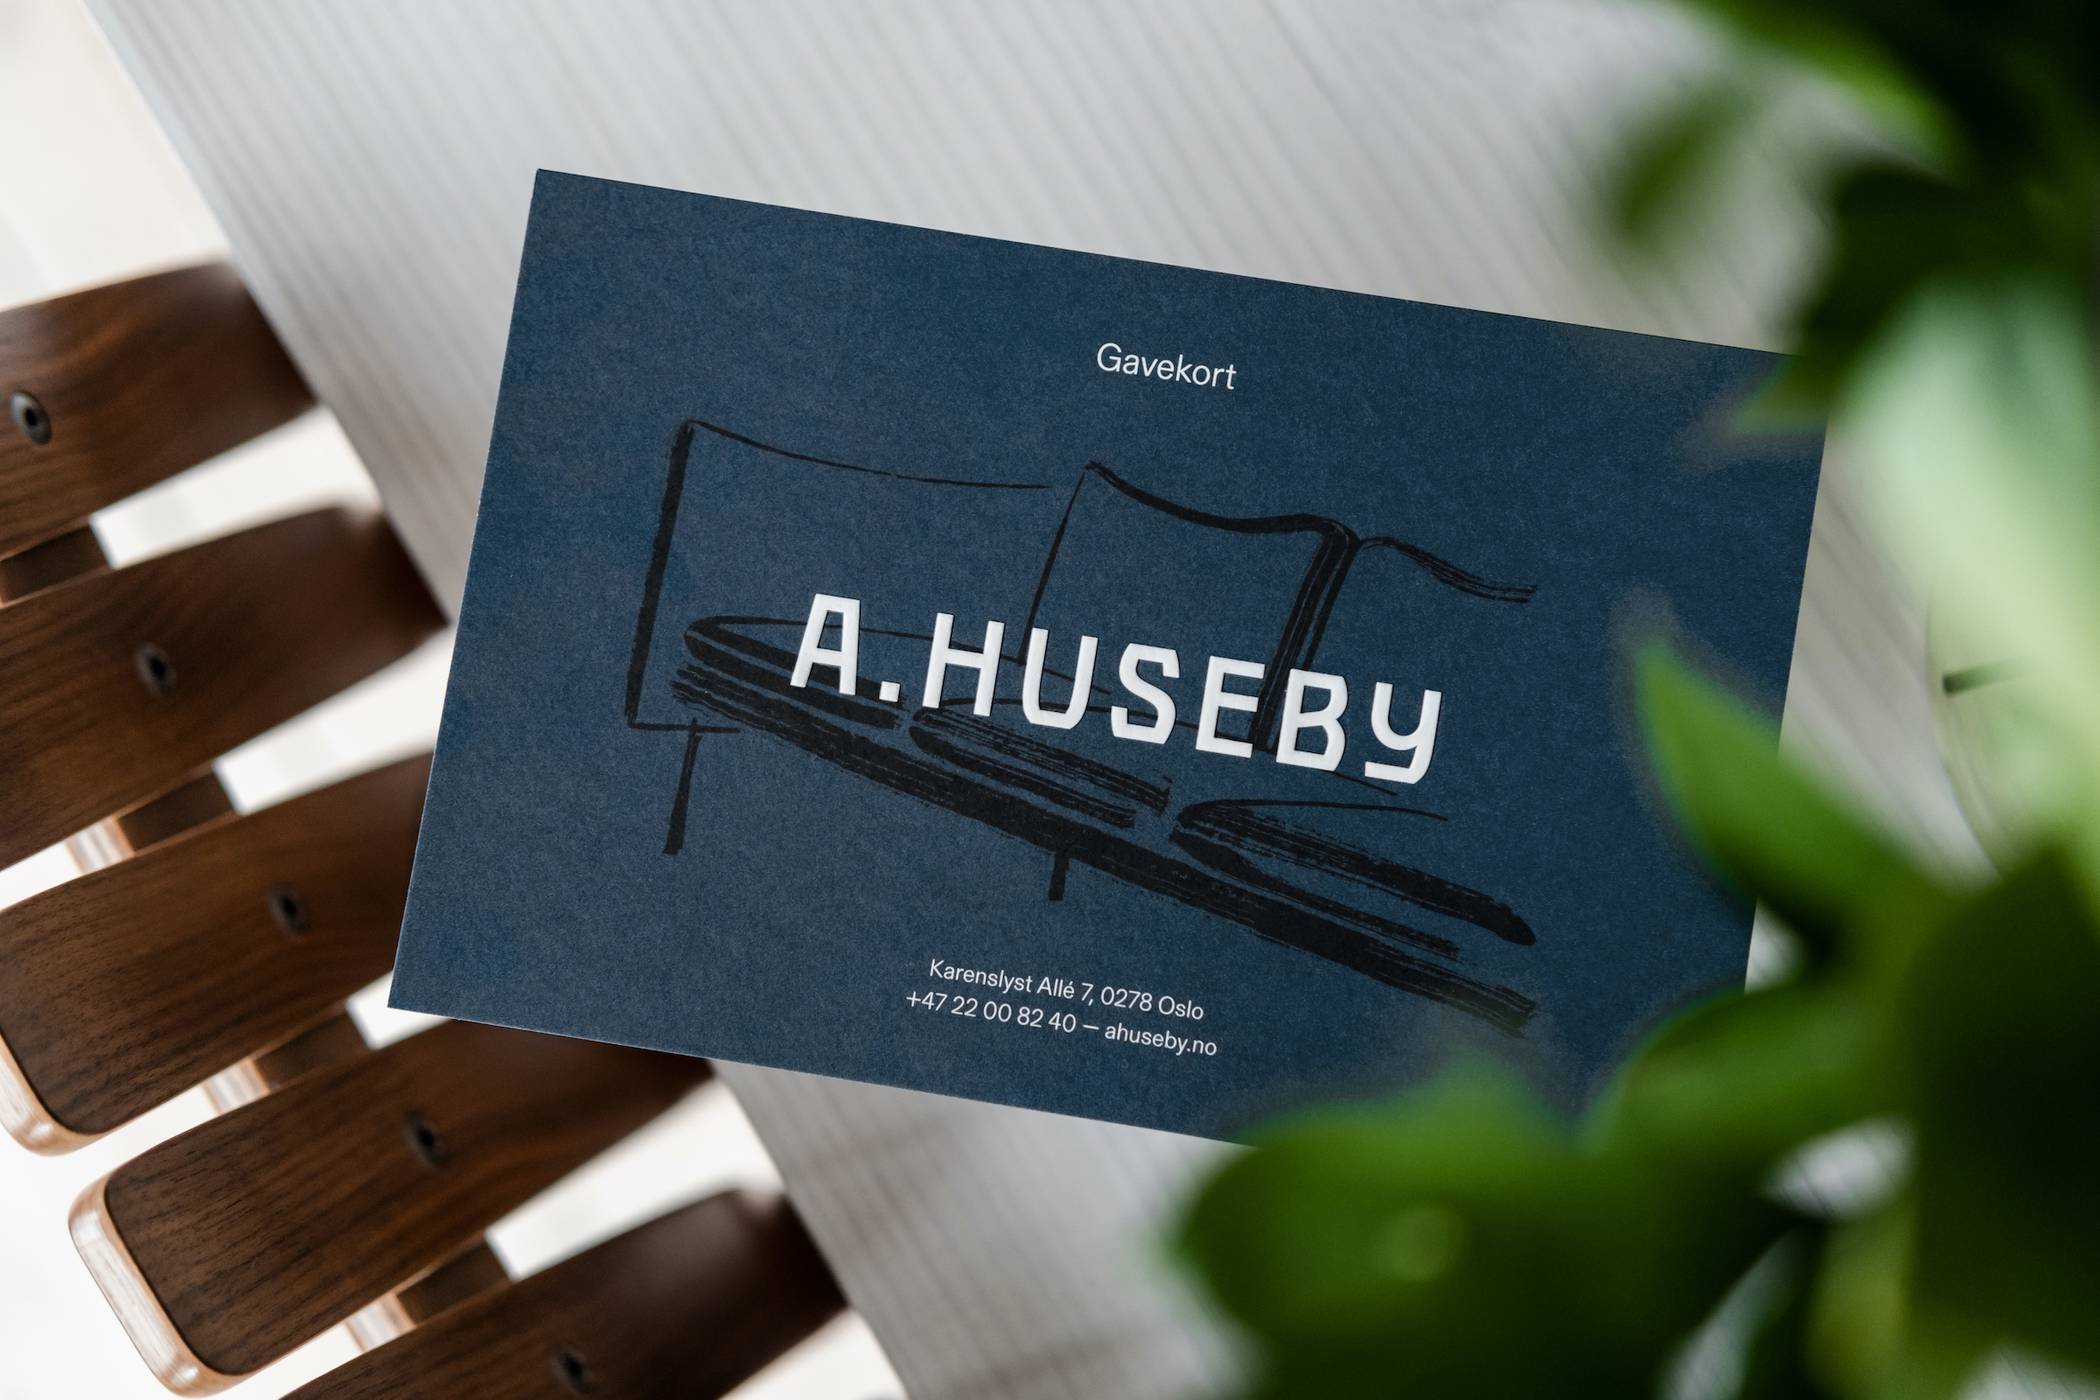 A.Huseby card detail